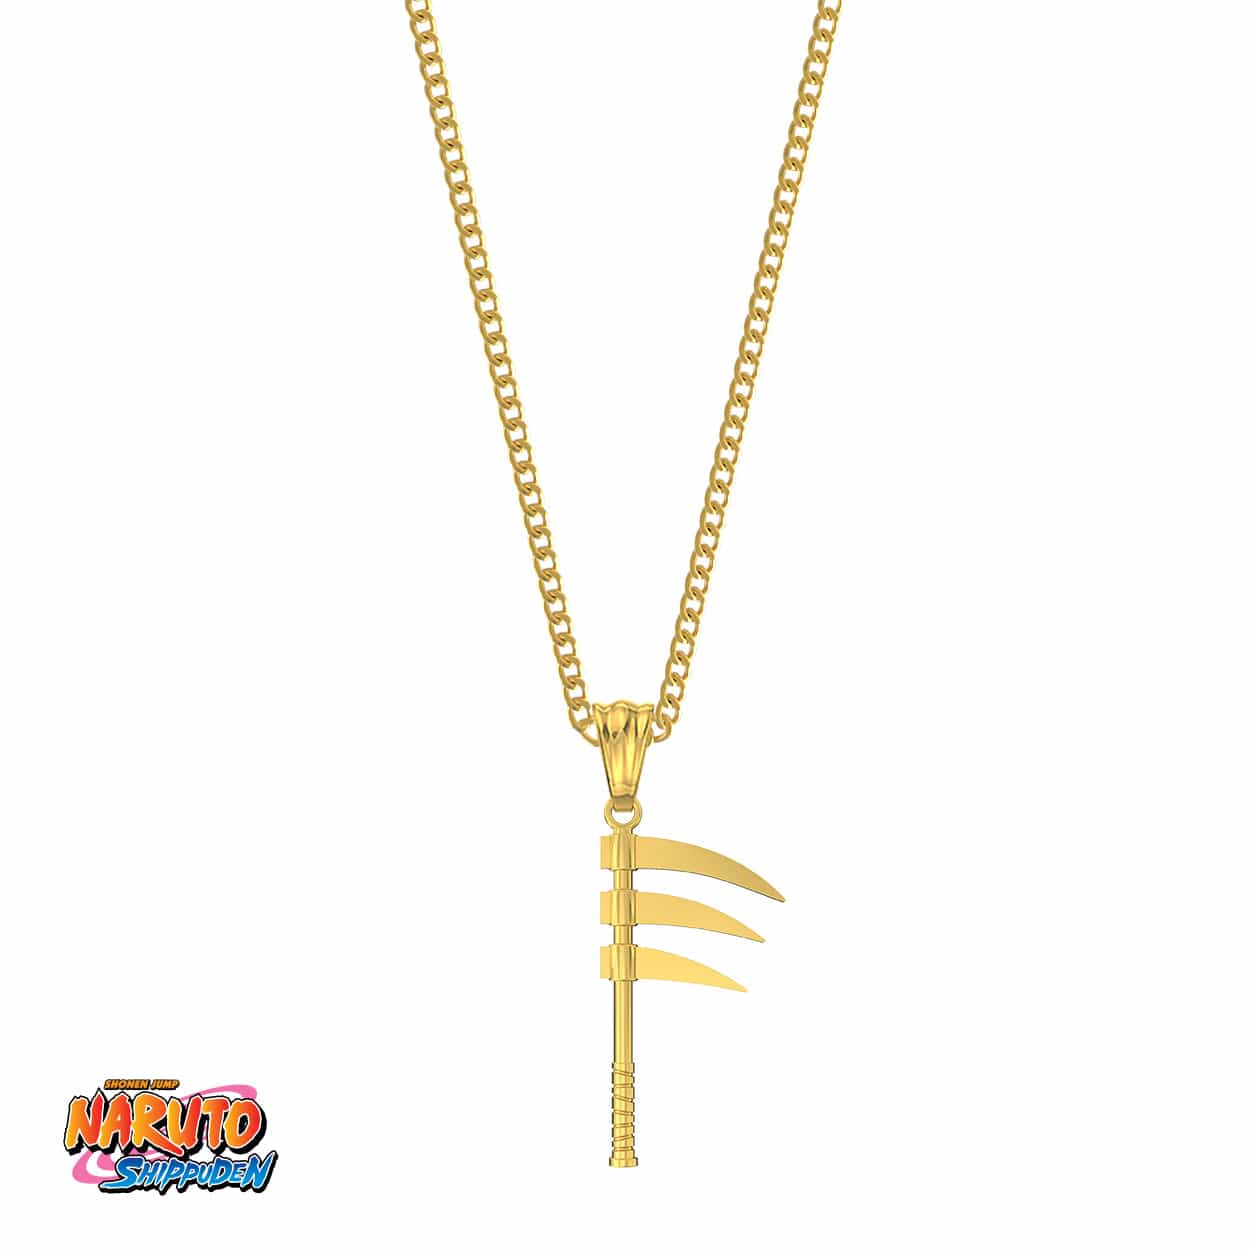 Naruto™ Hidan's Scythe Necklace